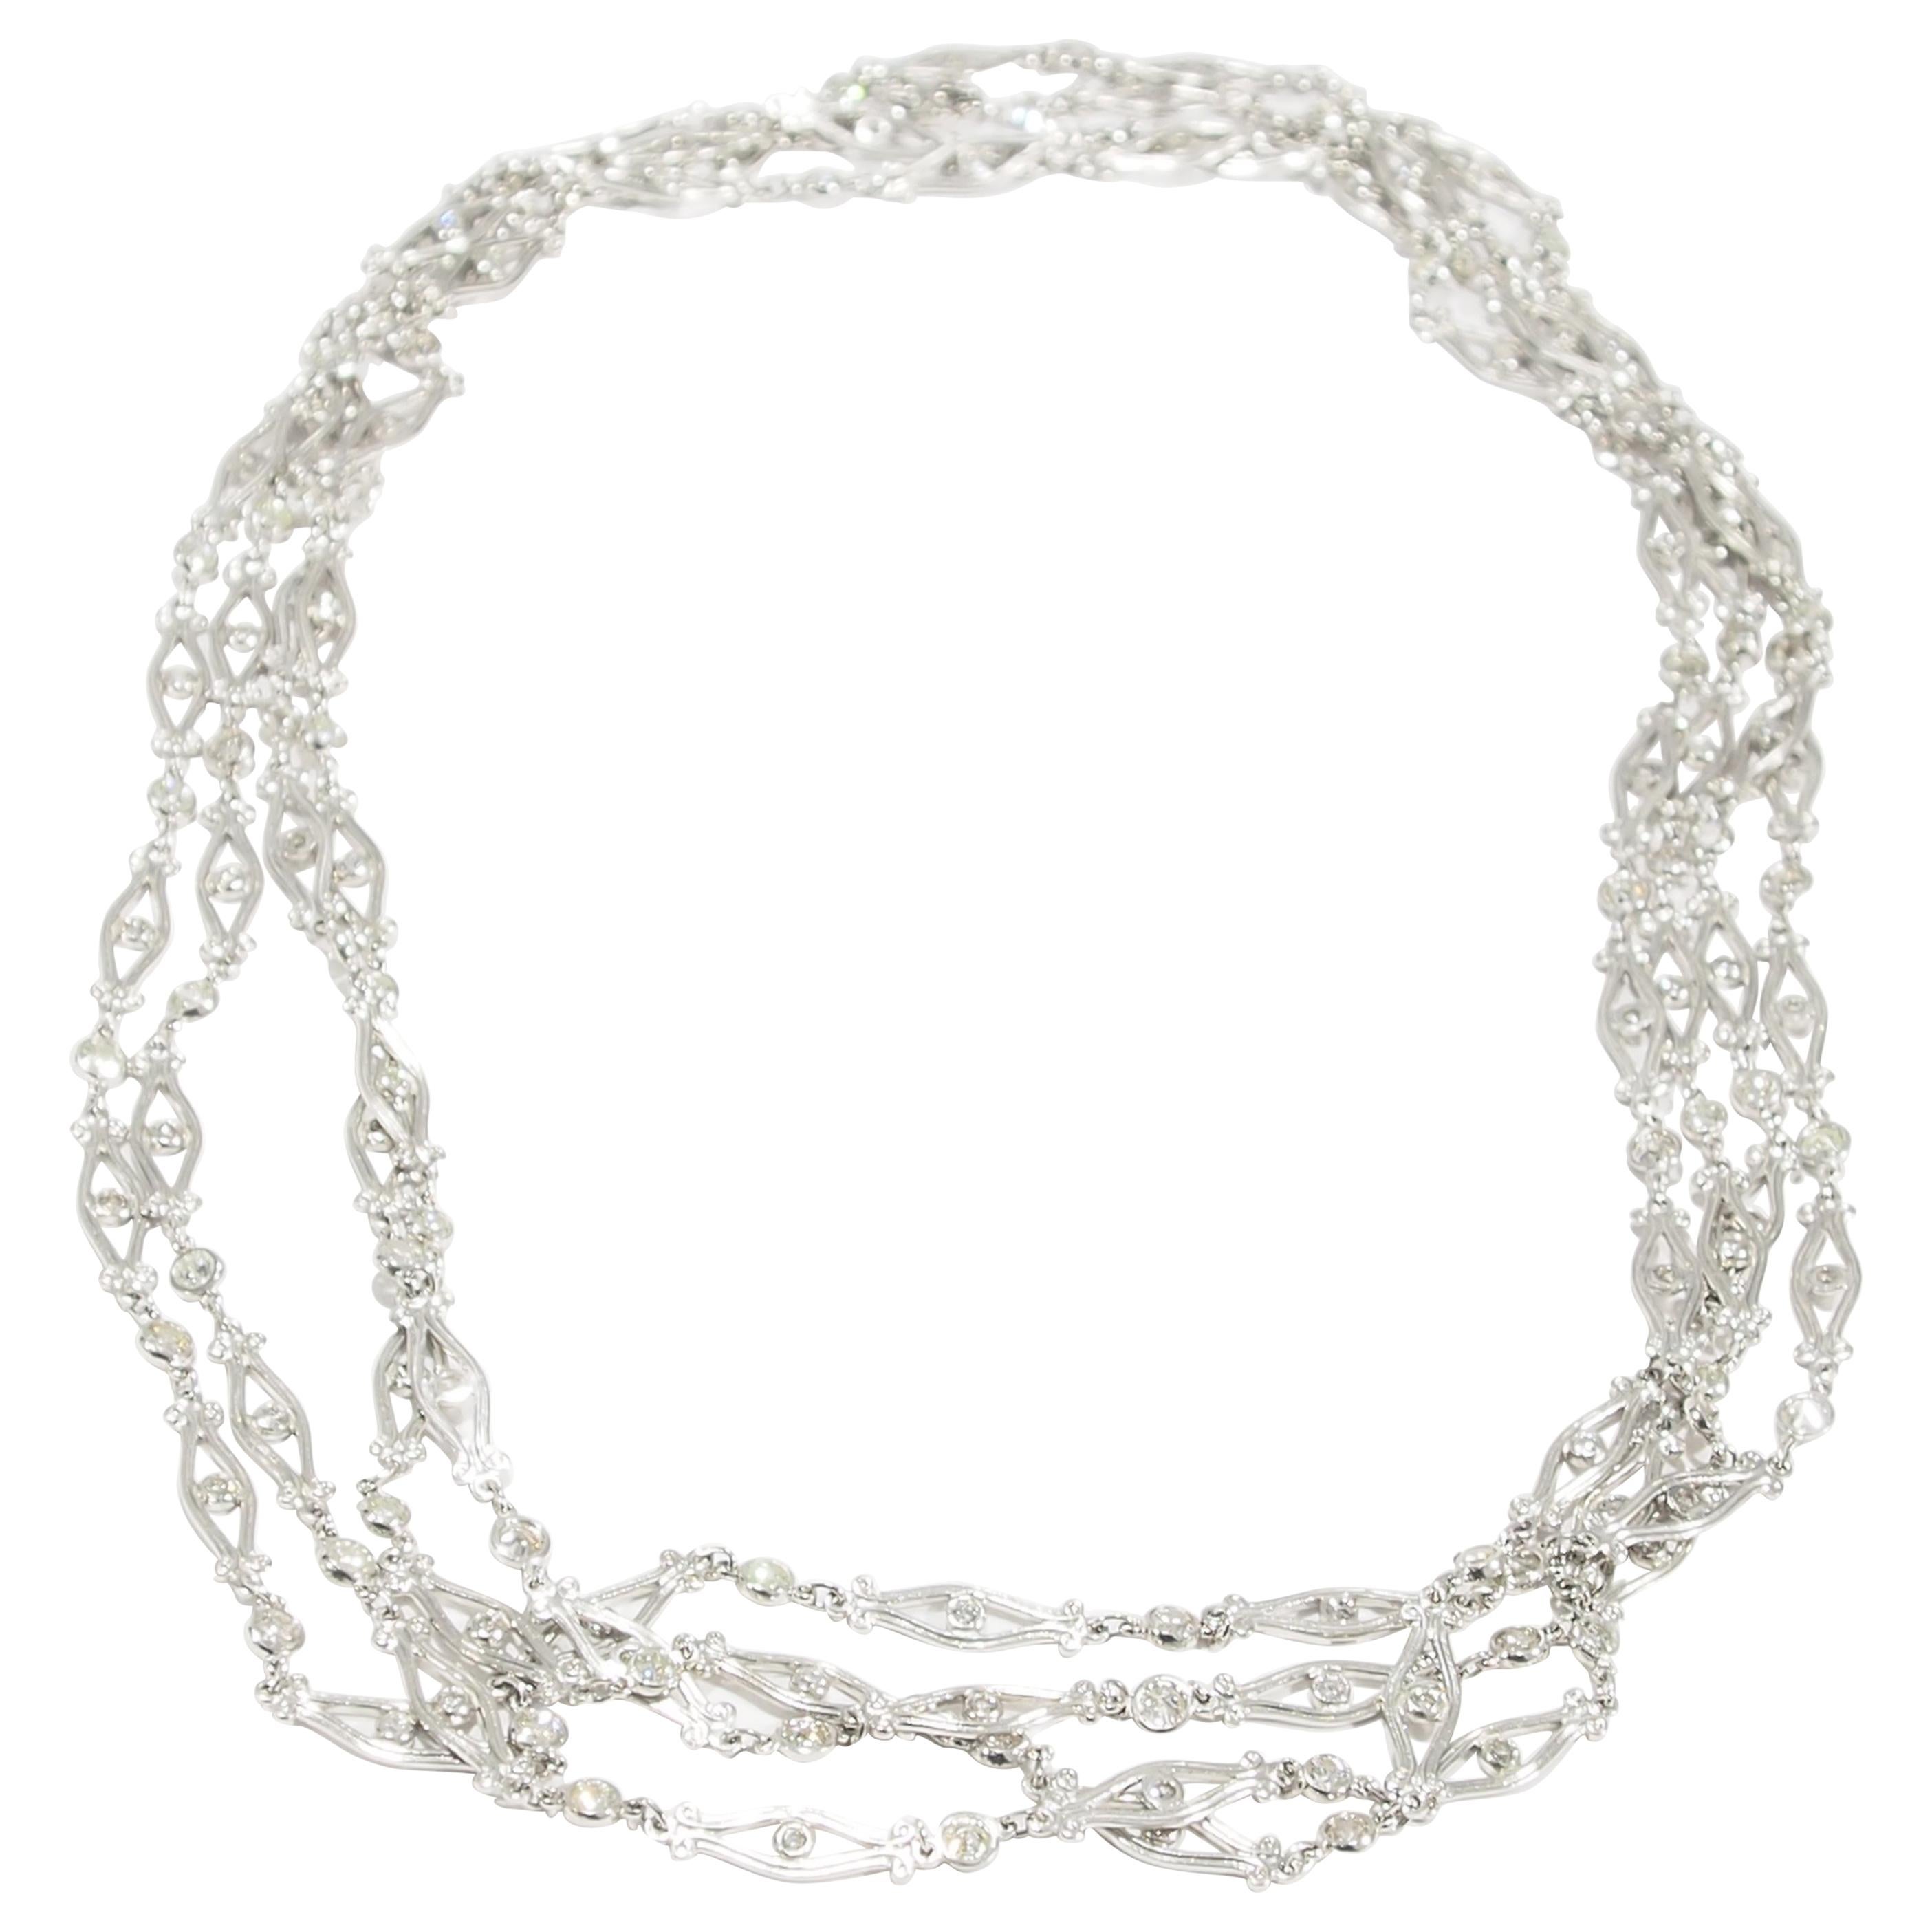 Platinum Diamond 7.23 Carat Necklace Art Deco Style